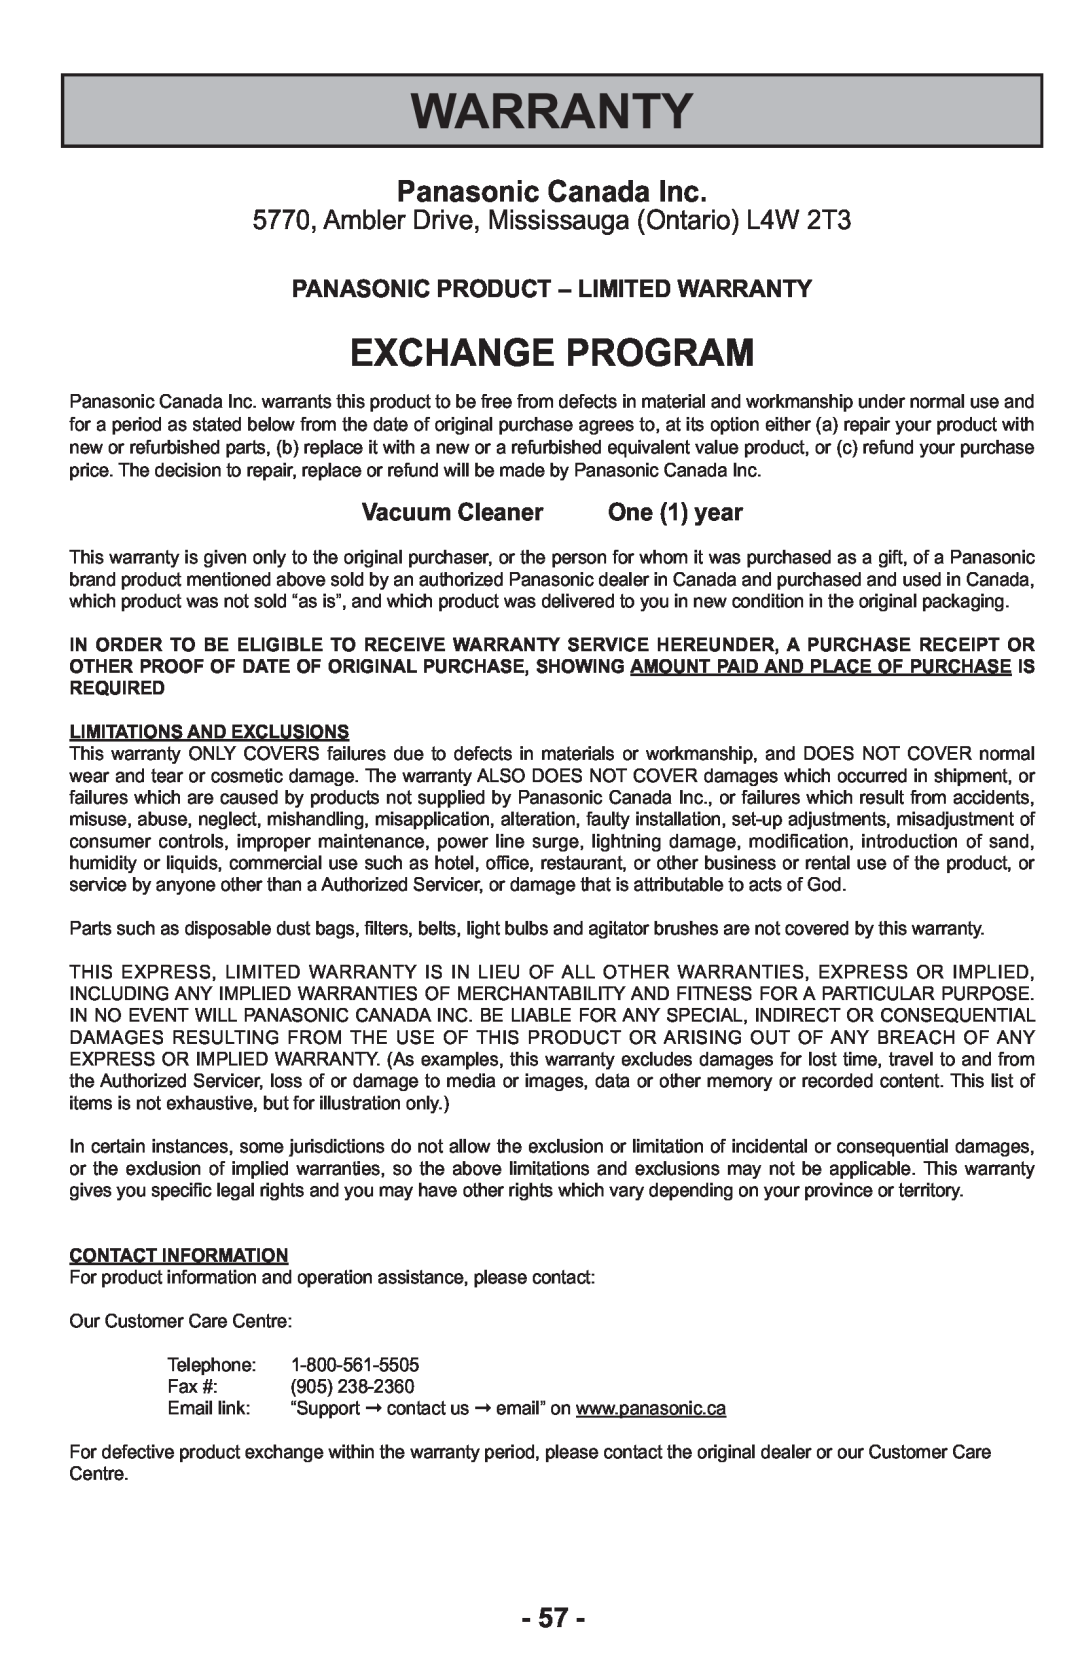 Panasonic MCCG917 Exchange Program, Panasonic Canada Inc, 5770, Ambler Drive, Mississauga Ontario L4W 2T3, Warranty 